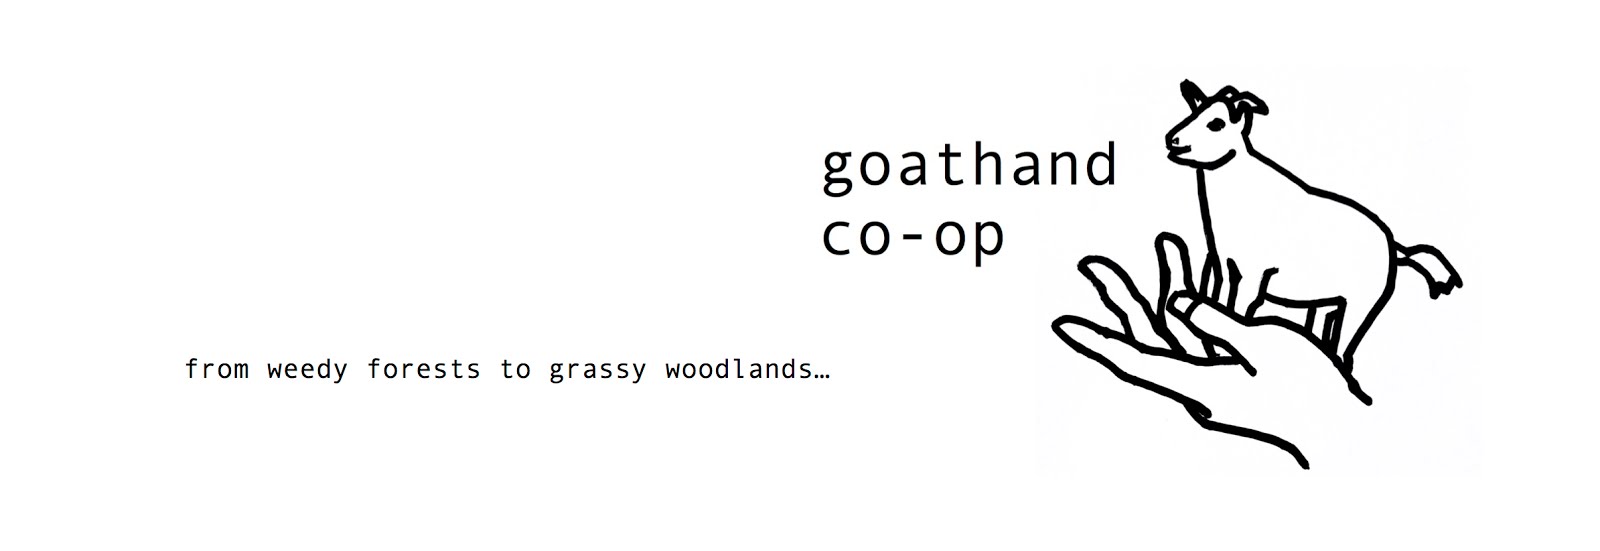 Goathand co-operative